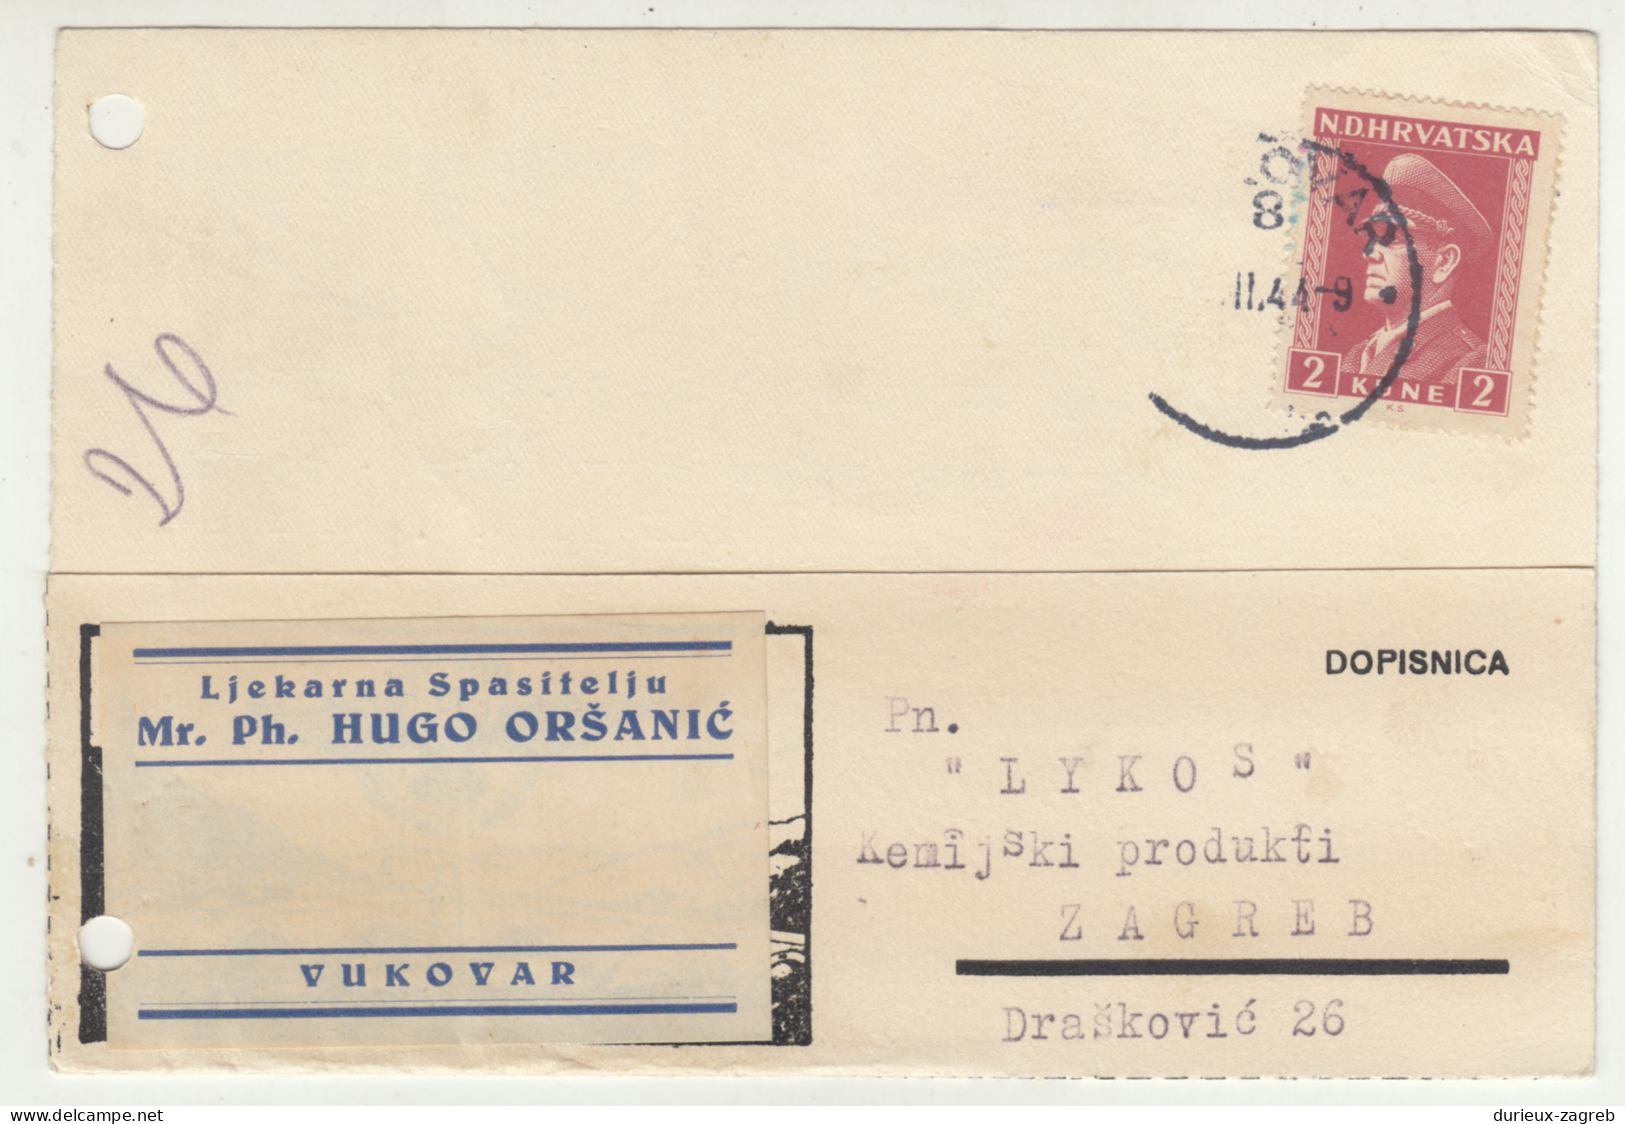 Ljekarna Spasitelju, Hugo Oršanić, Vukovar Company Postal Card Posted 1944 B240503 - Kroatien